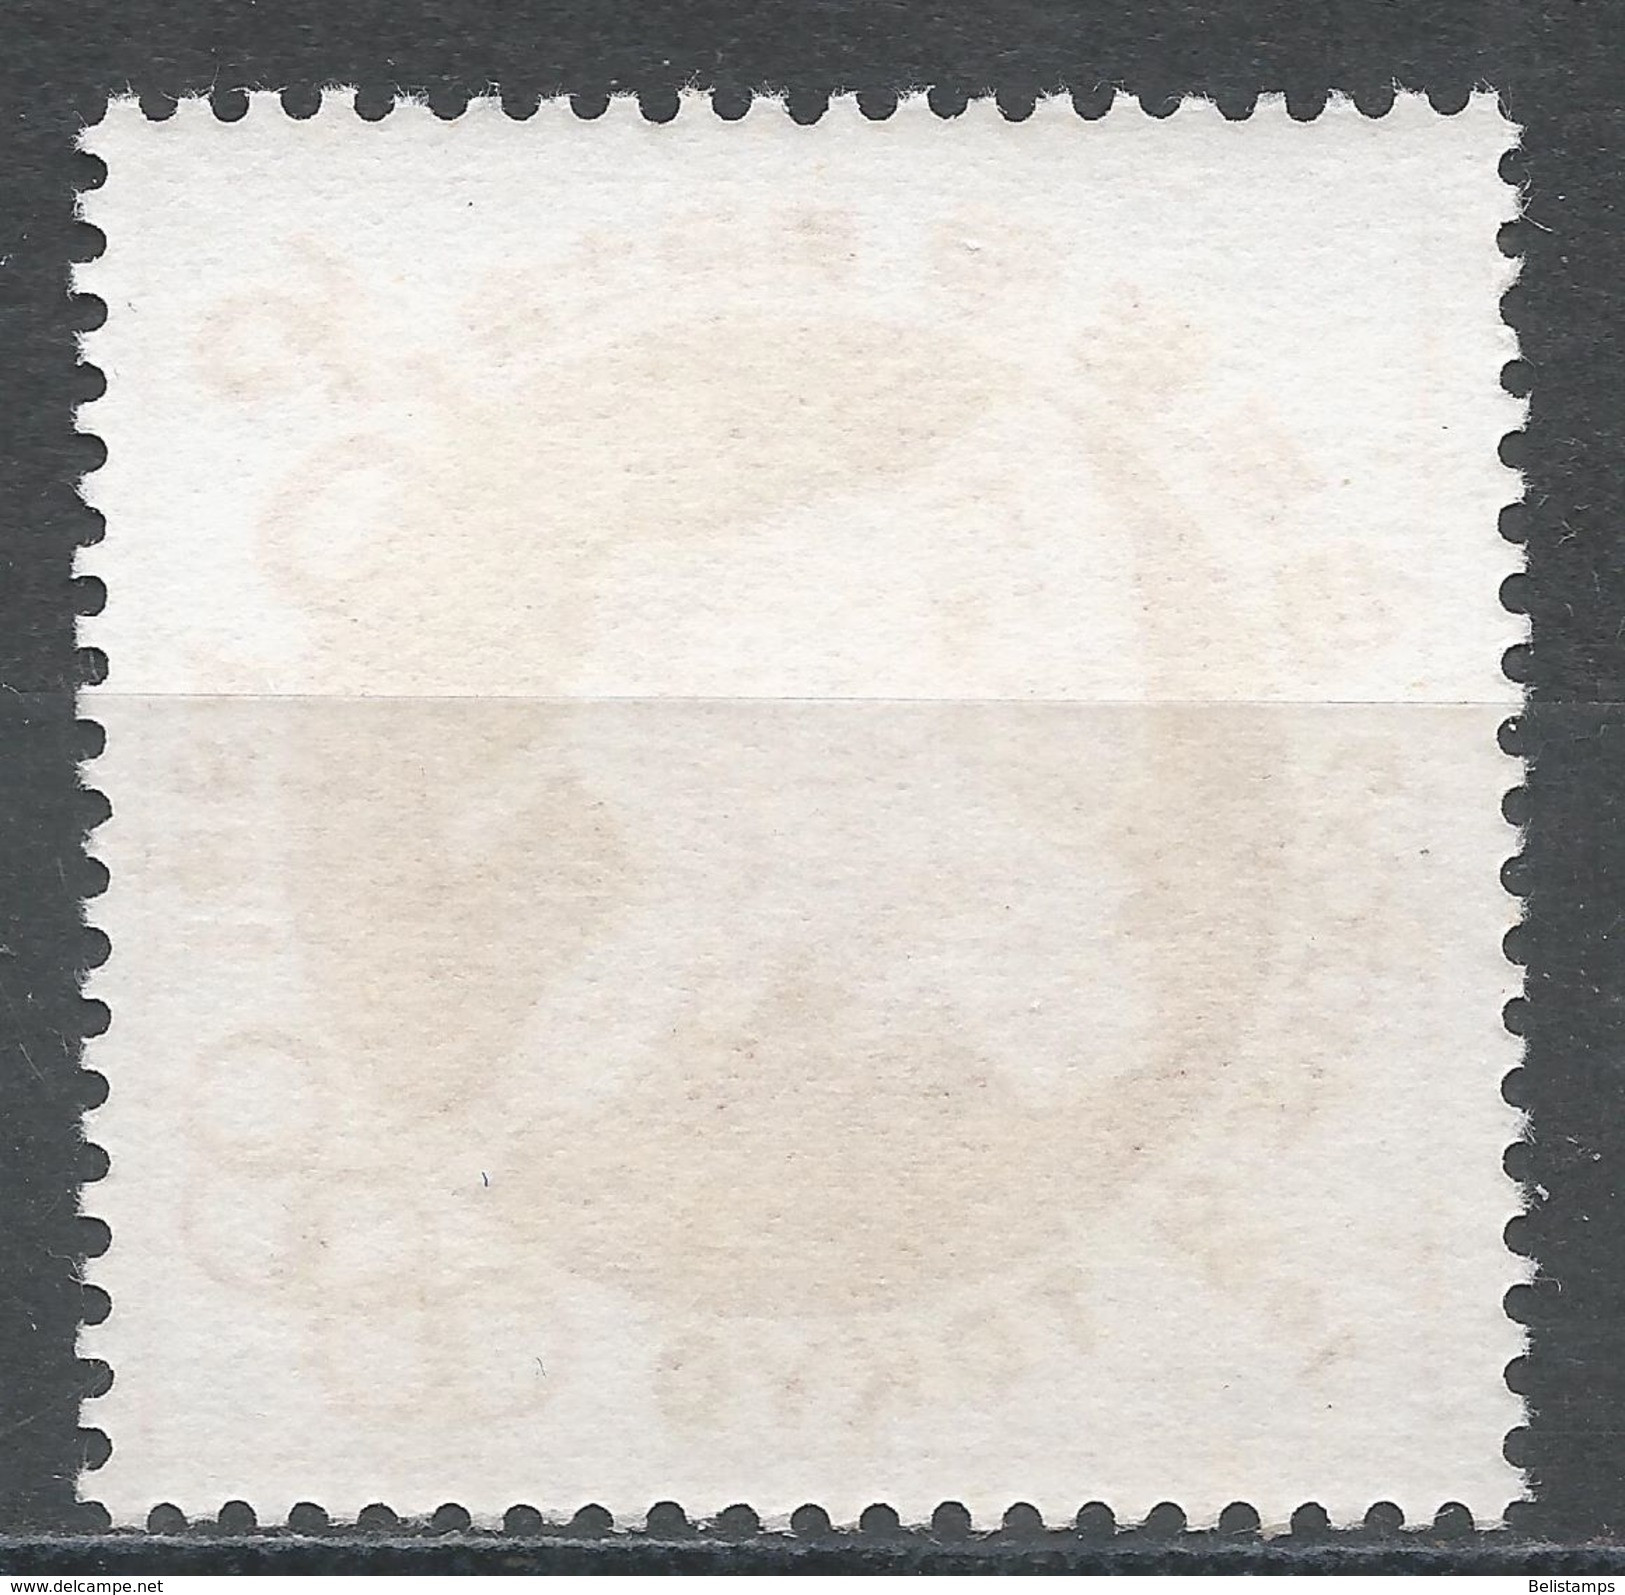 Japan 1962. Scott #B17 (MNH) Olympic Games, Tokyo, Judo - Unused Stamps